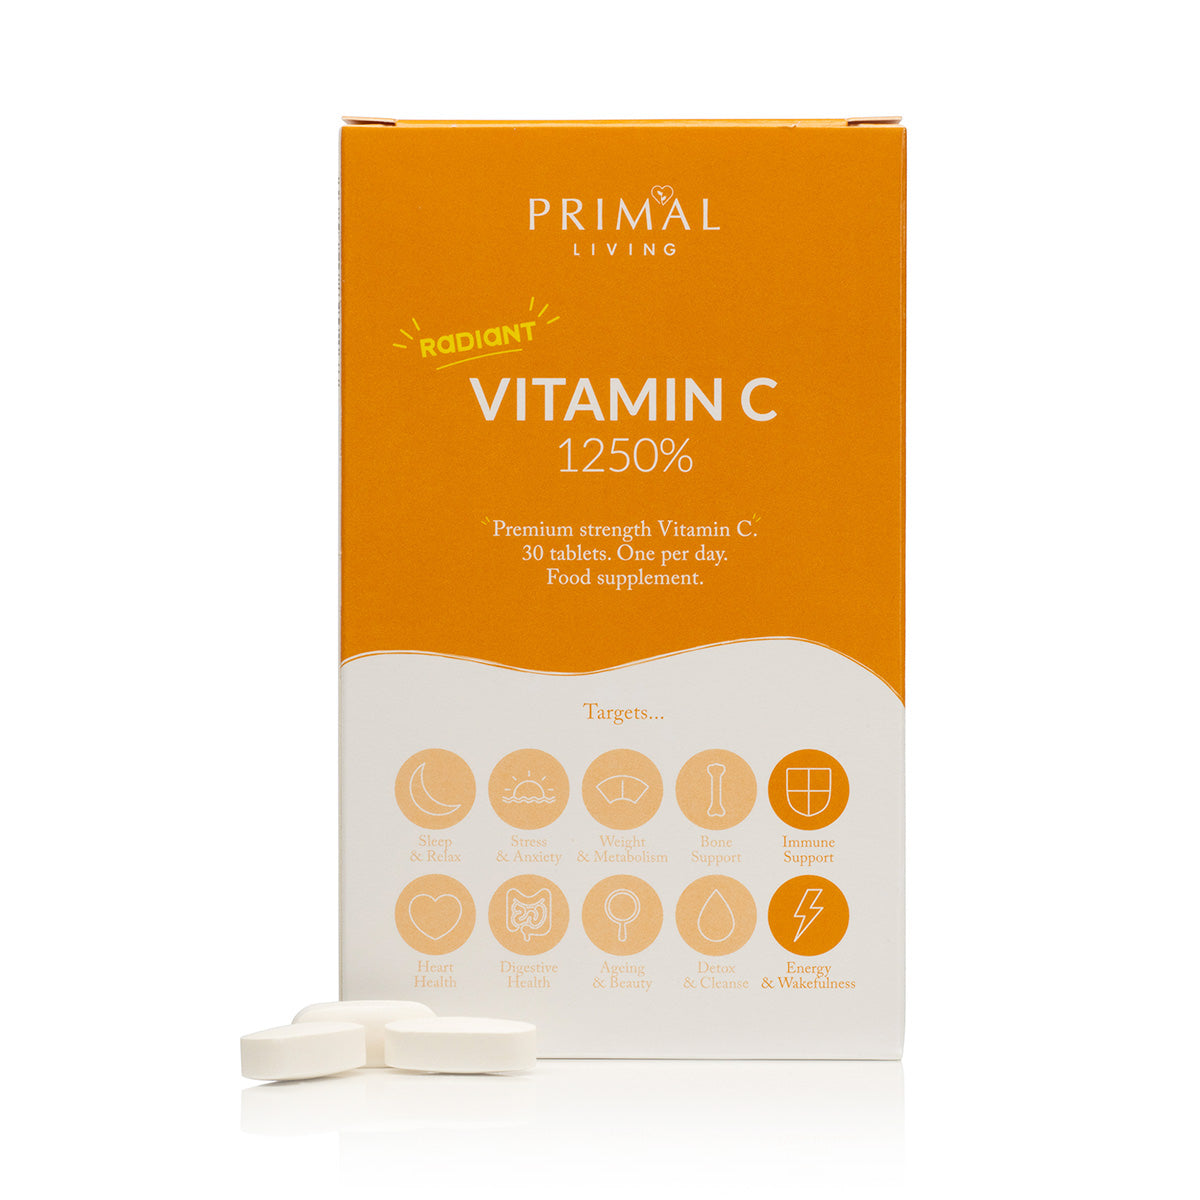 Vitamin C High Strength Tablets (1250%)